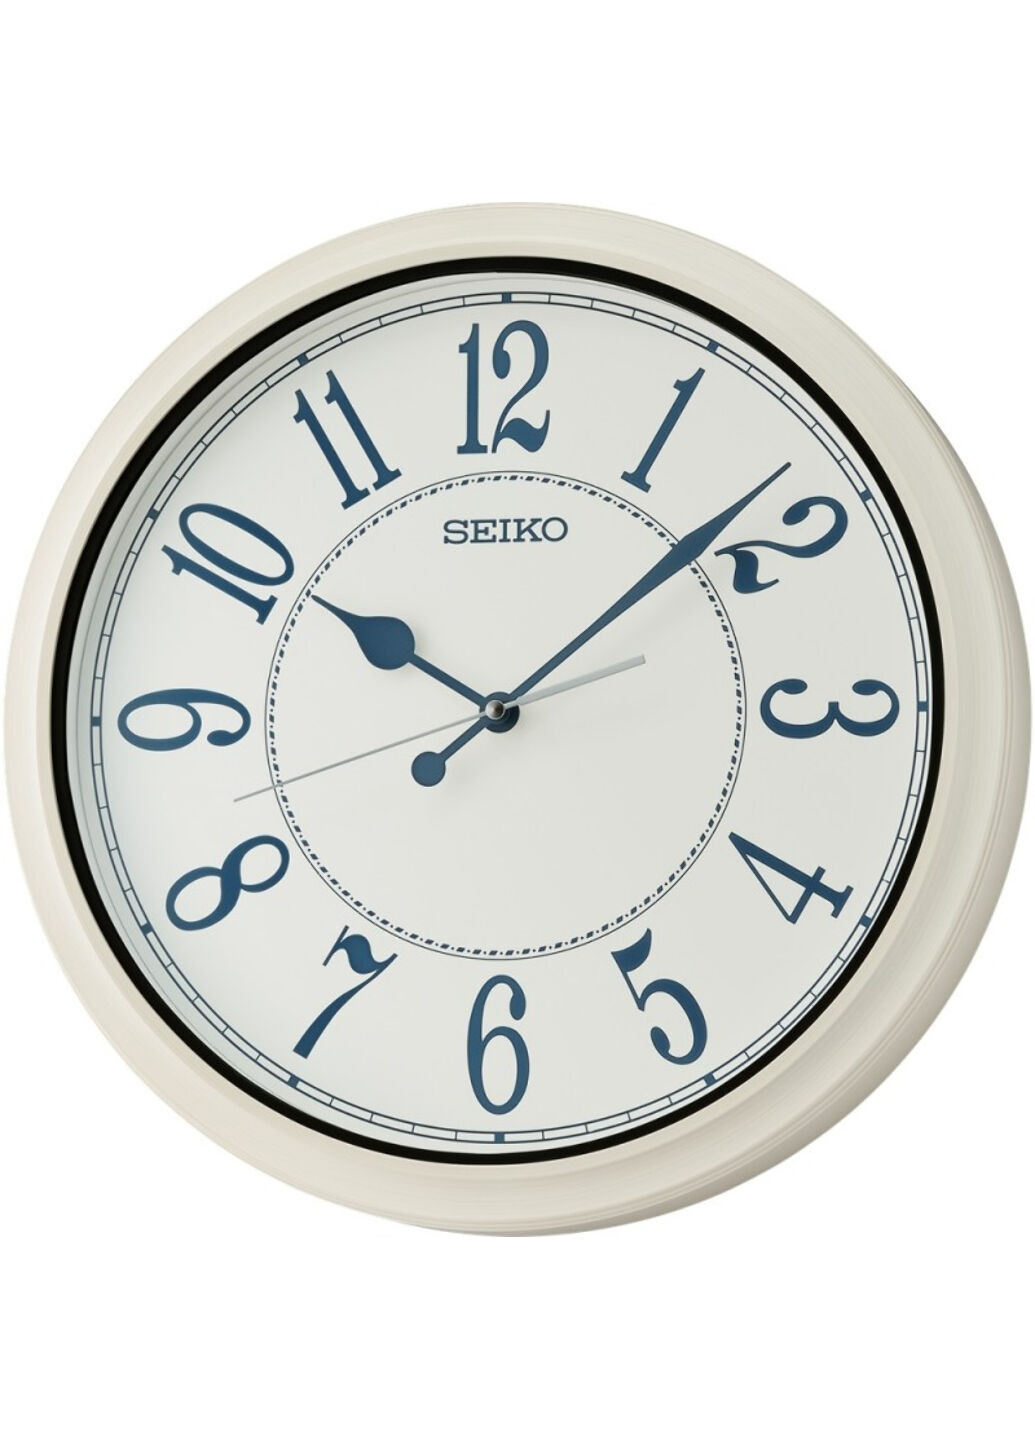 Годинники Seiko qxa801w (272157898)